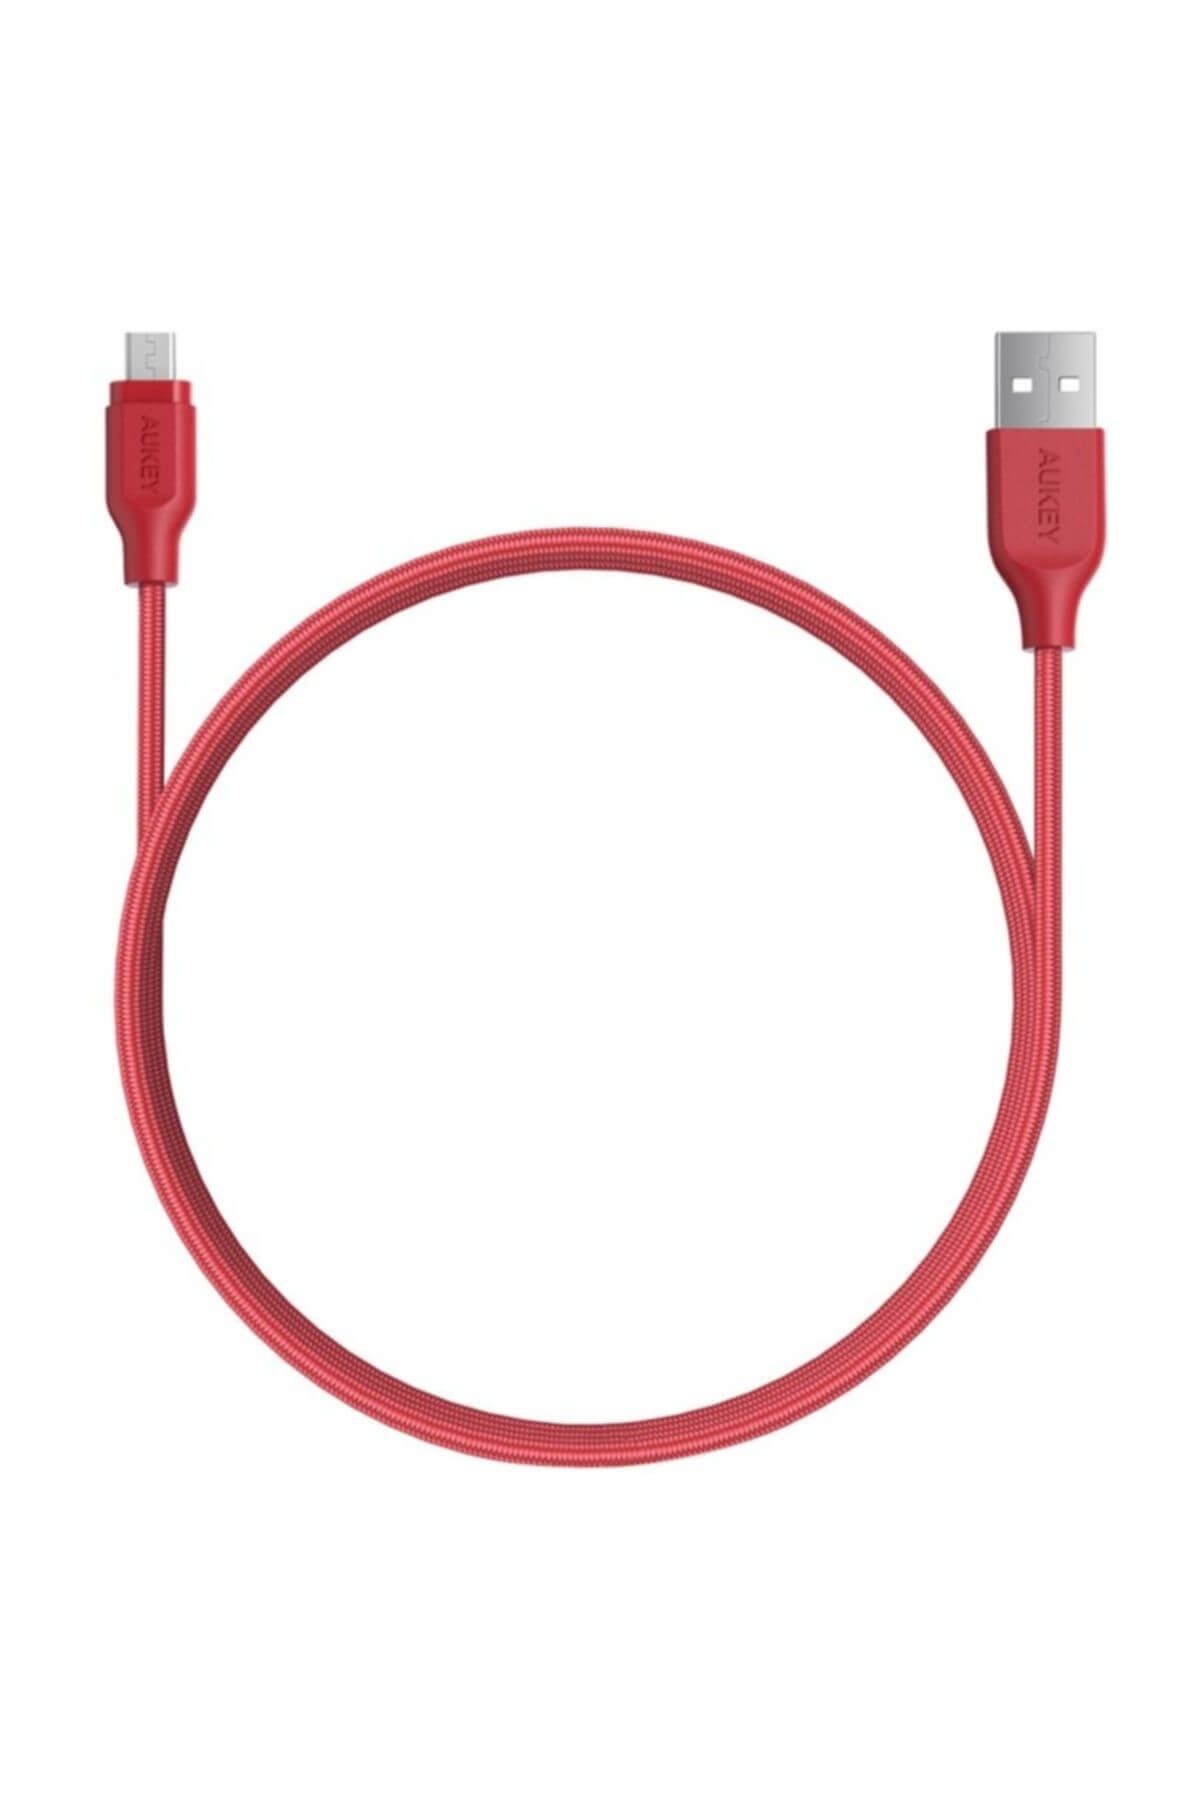 Aukey CB-AM1 Yüksek Performans Naylon Örgülü Micro USB 1.2m Kırmızı